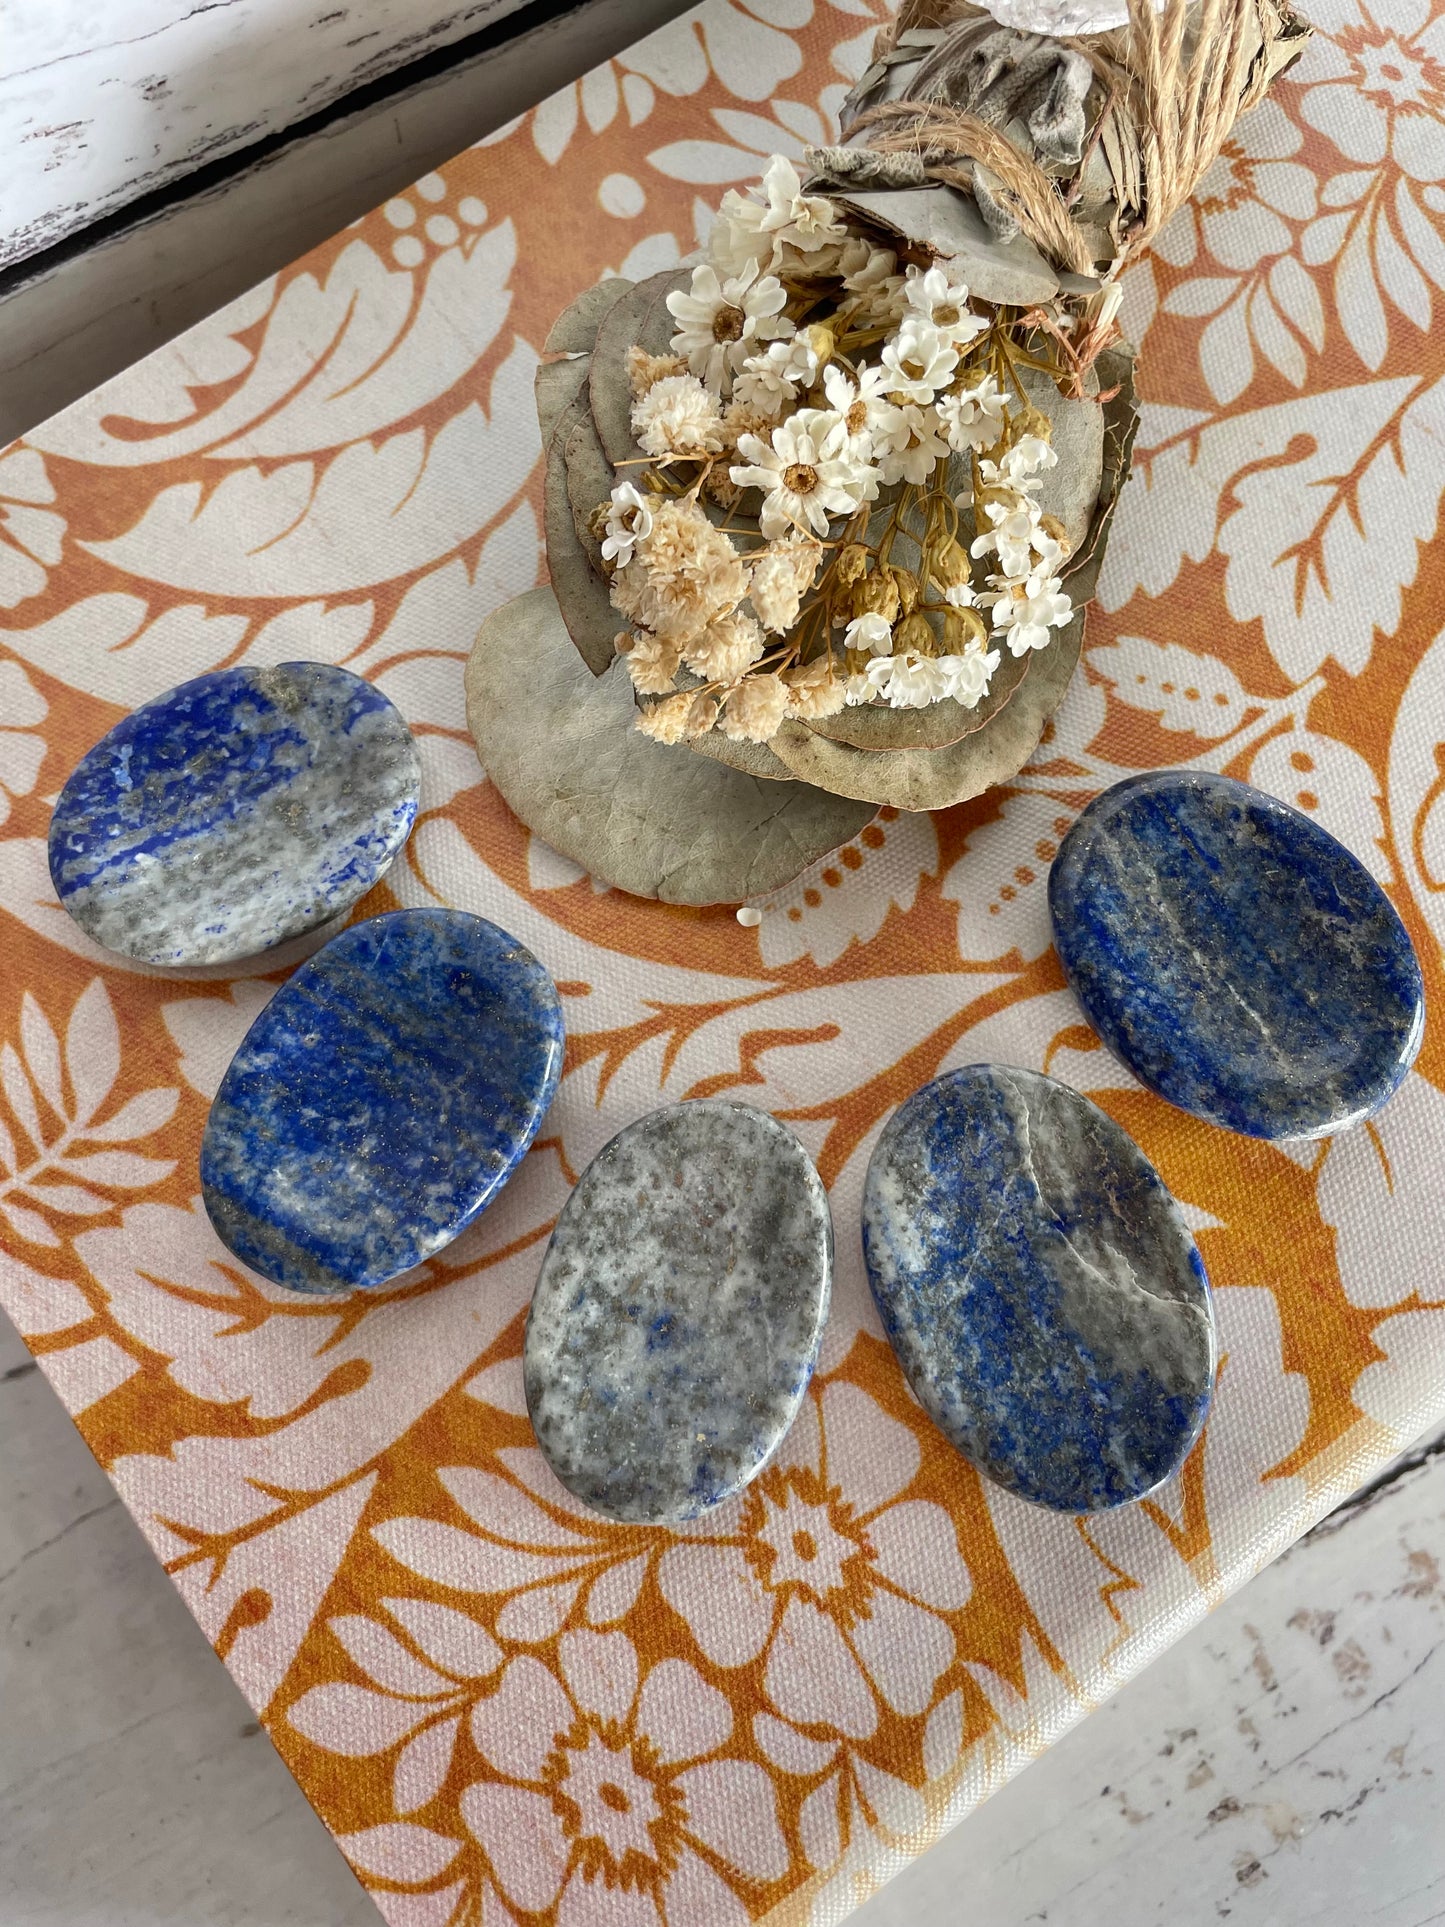 INTUITIVELY CHOSEN ~ Lapis Lazuli Thumb/Worry Stone